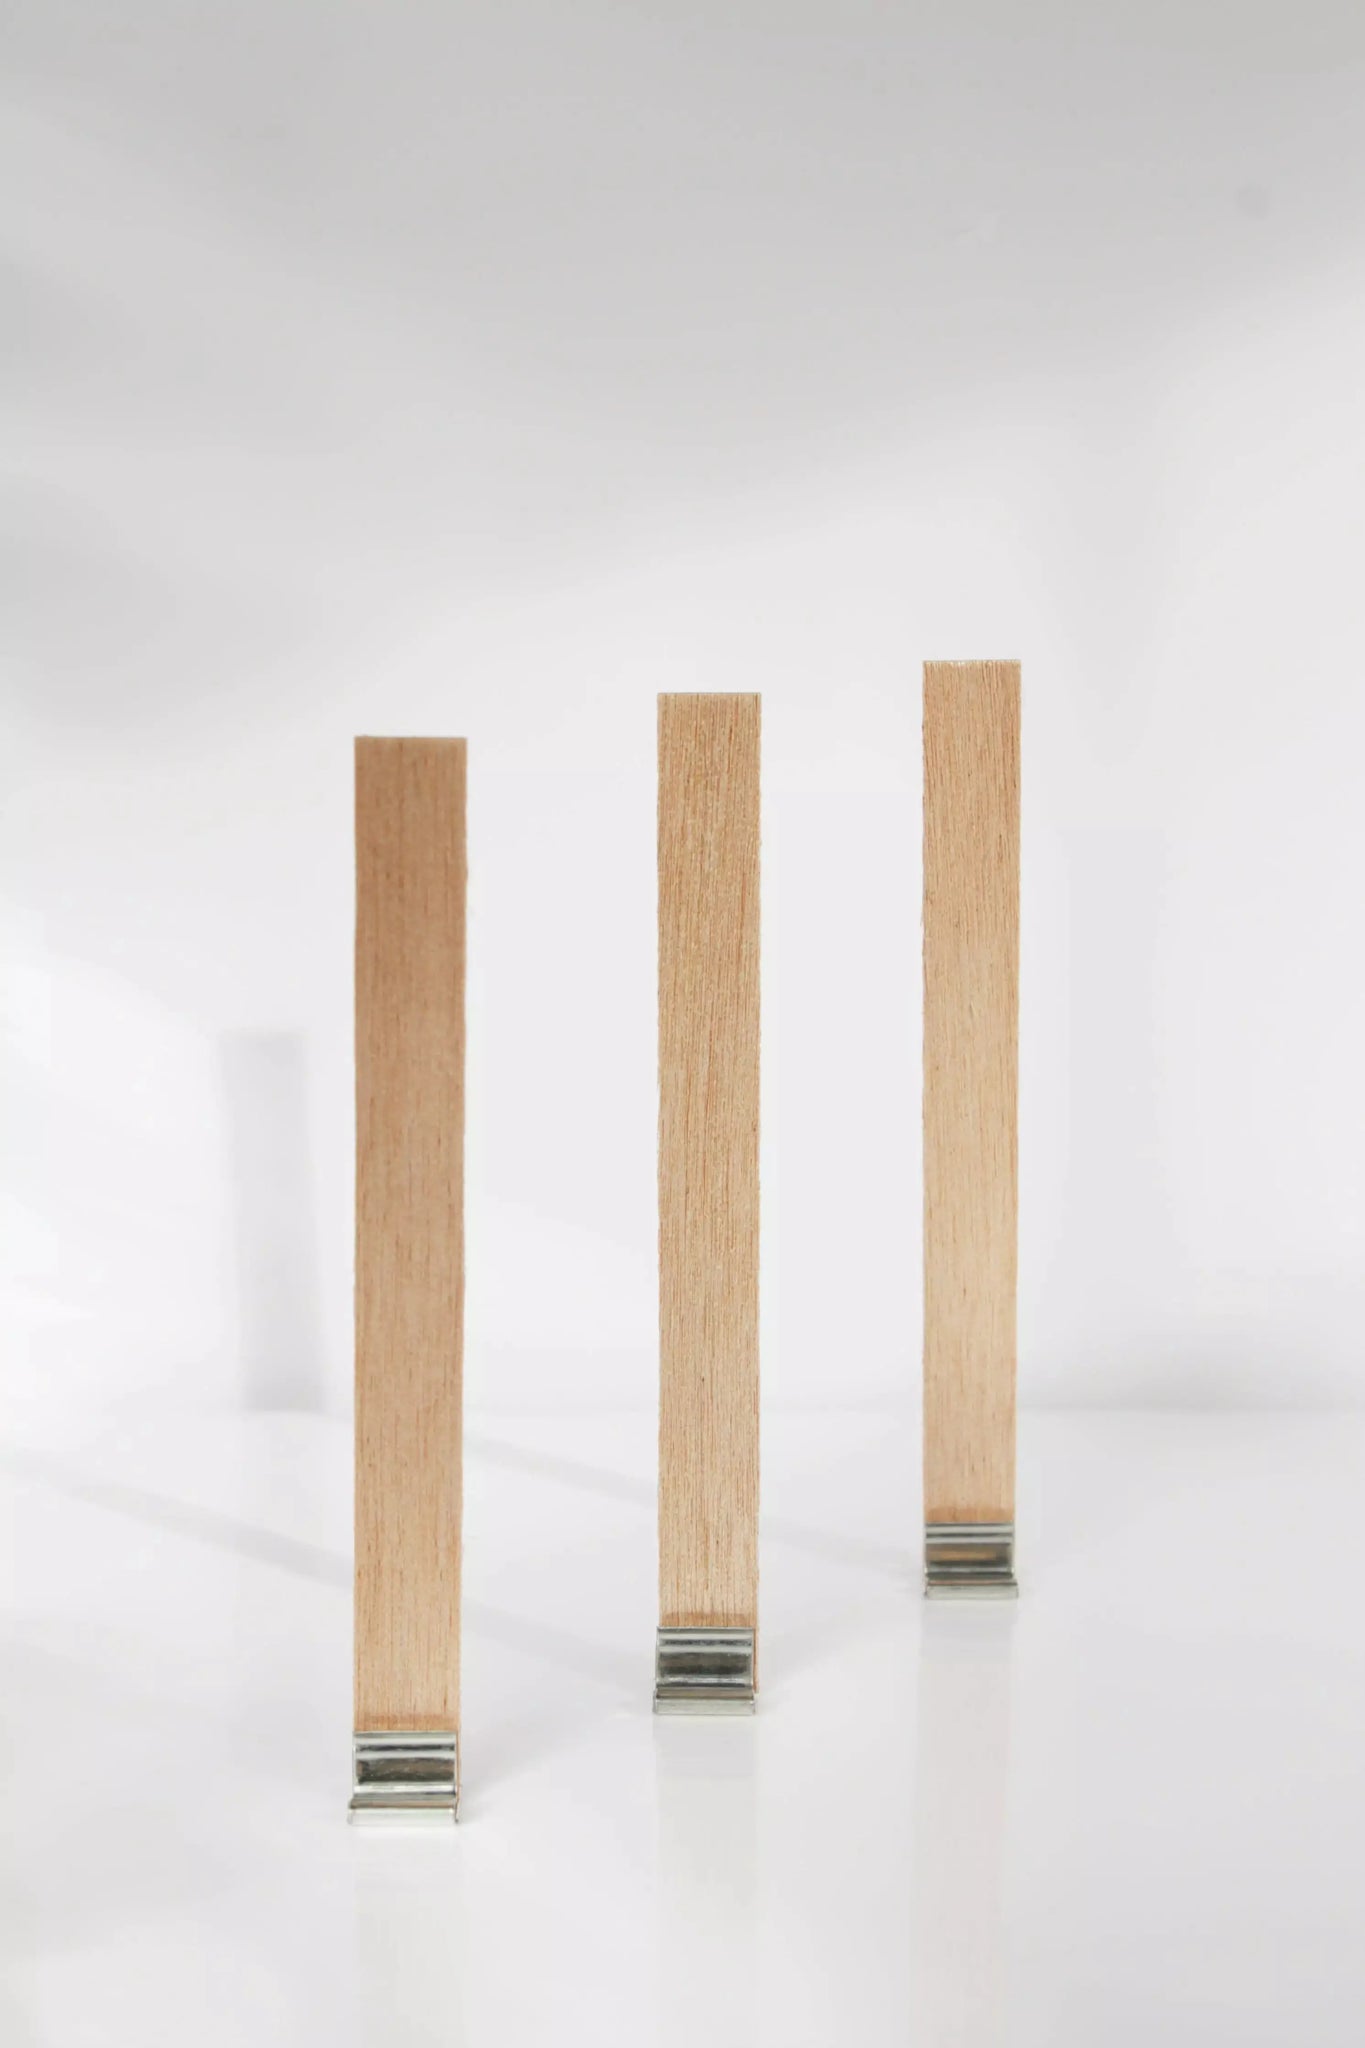 Mechas de madera de 19x130 mm para hacer velas. ¡Fáciles de usar! Cantidad  Pack de 10